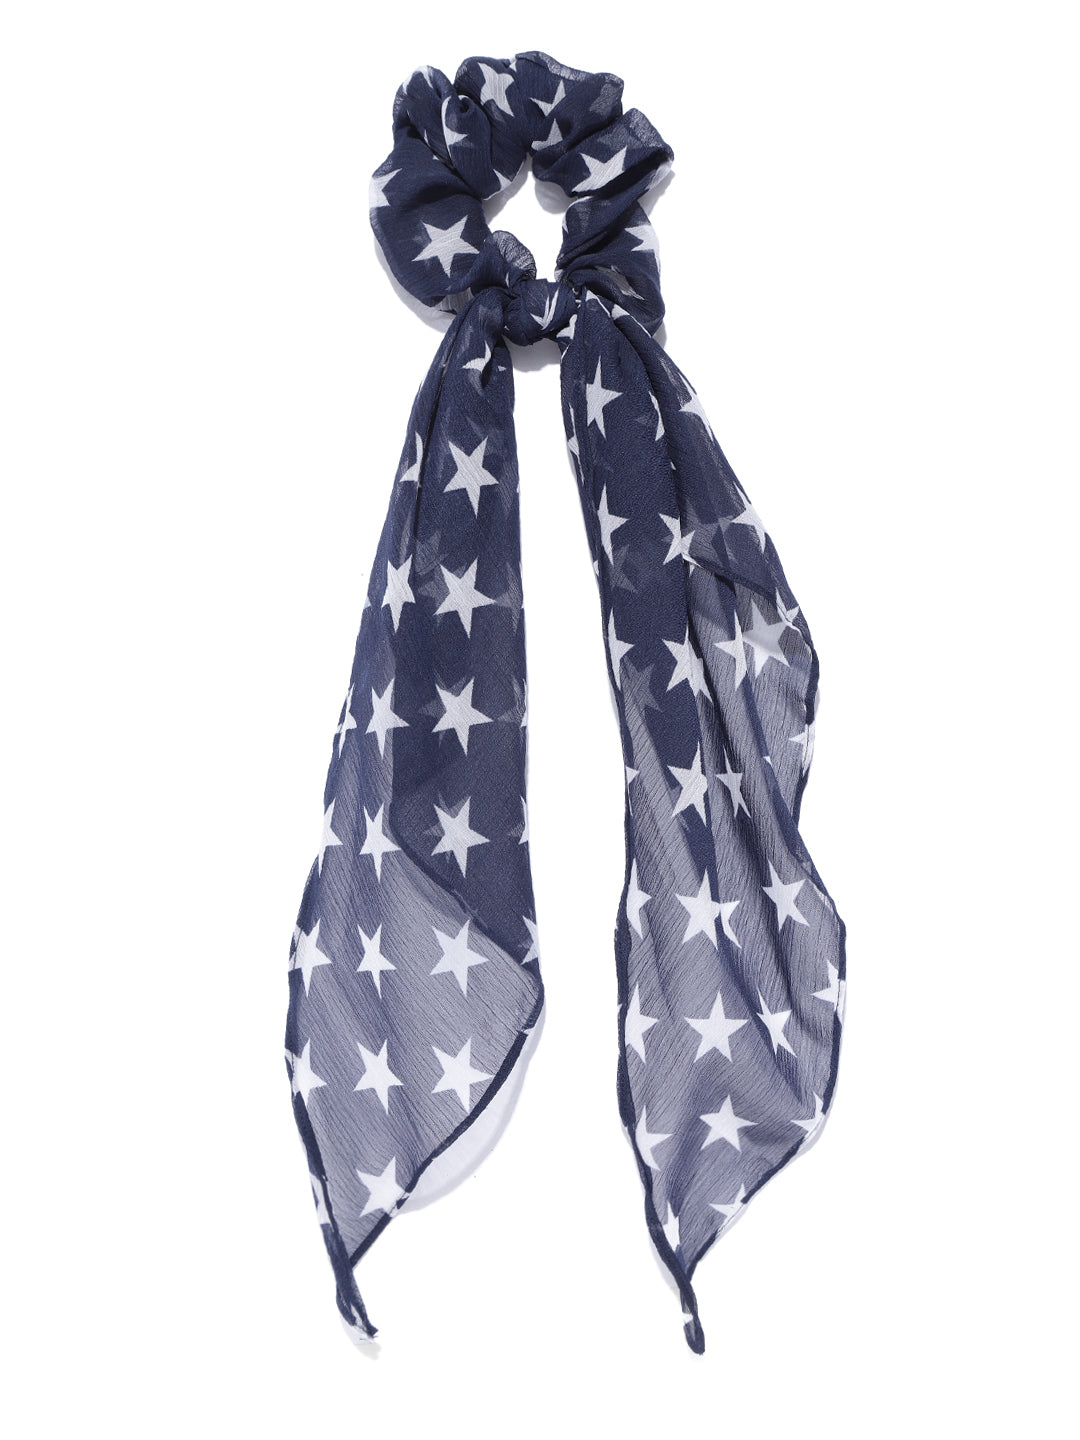 Blueberry white star printed navy blue ruffle scrunchie